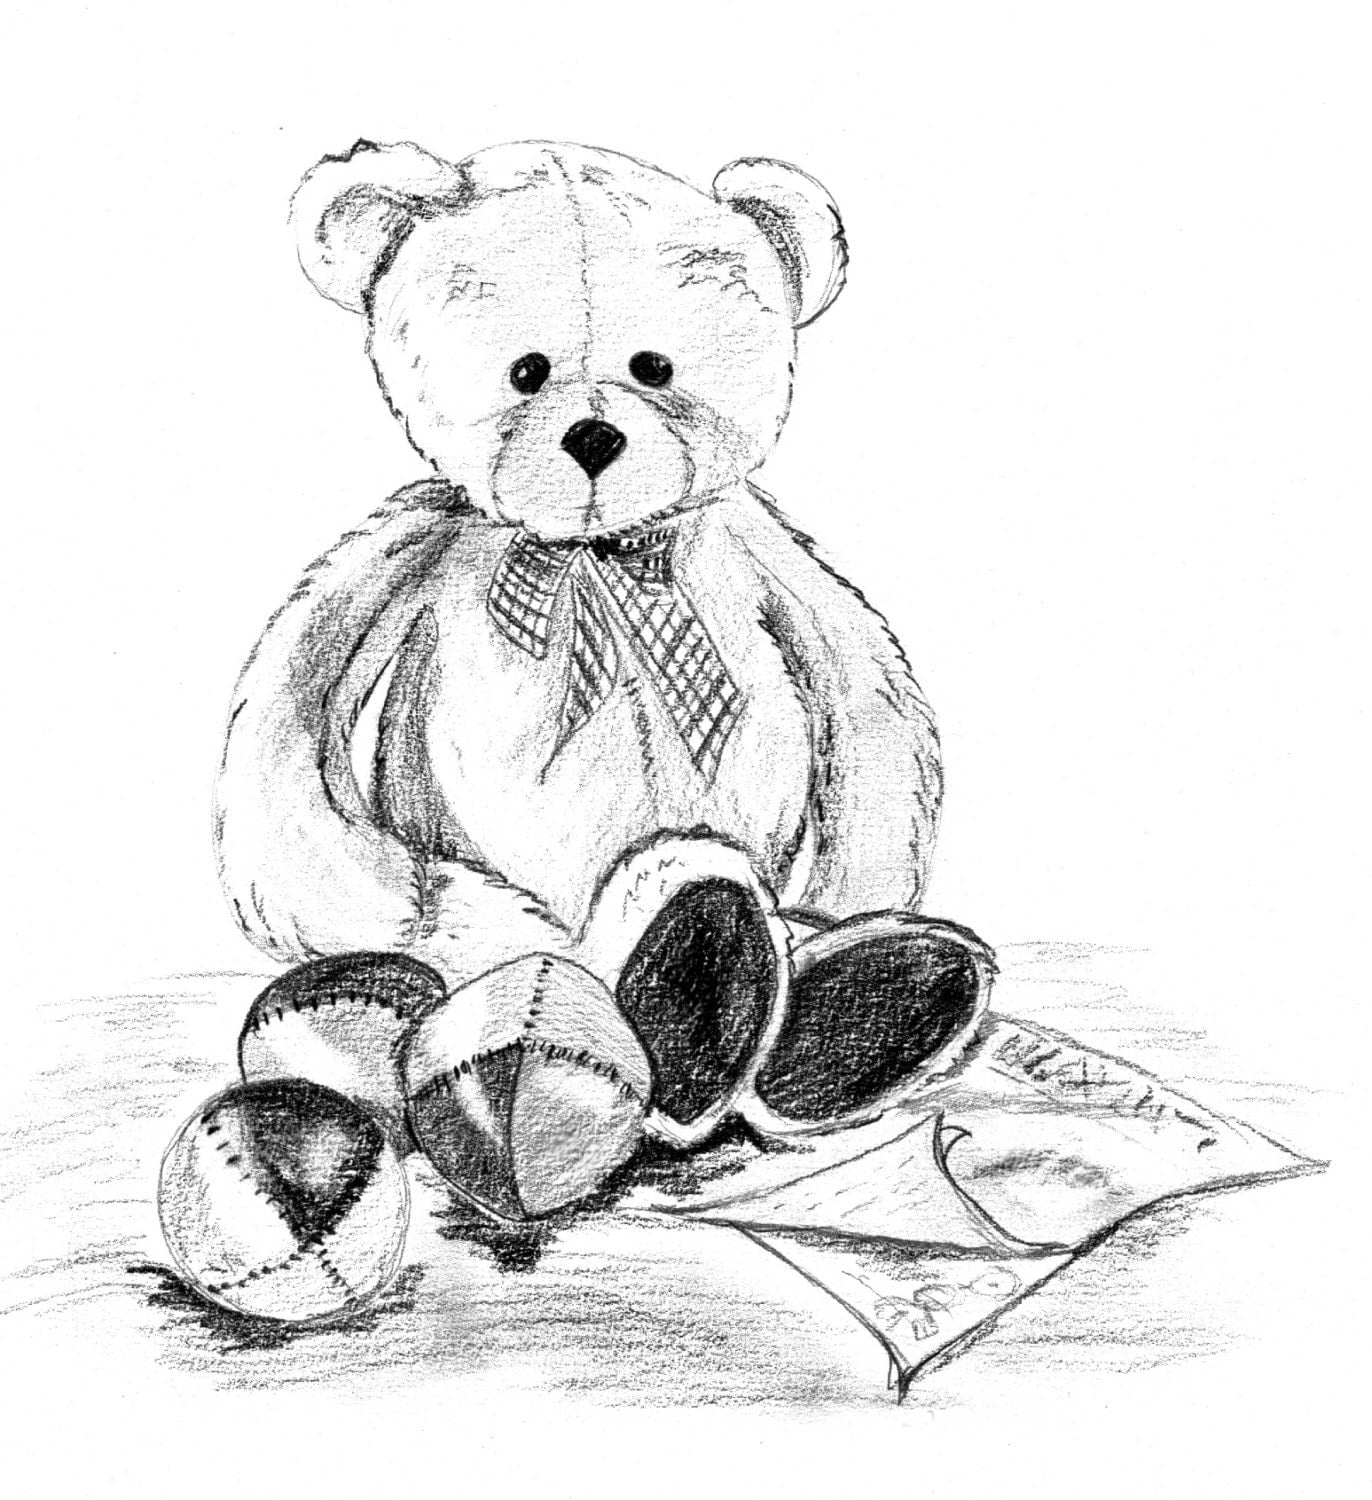 Teddy bear pencil drawing by Trishannebullock on Etsy